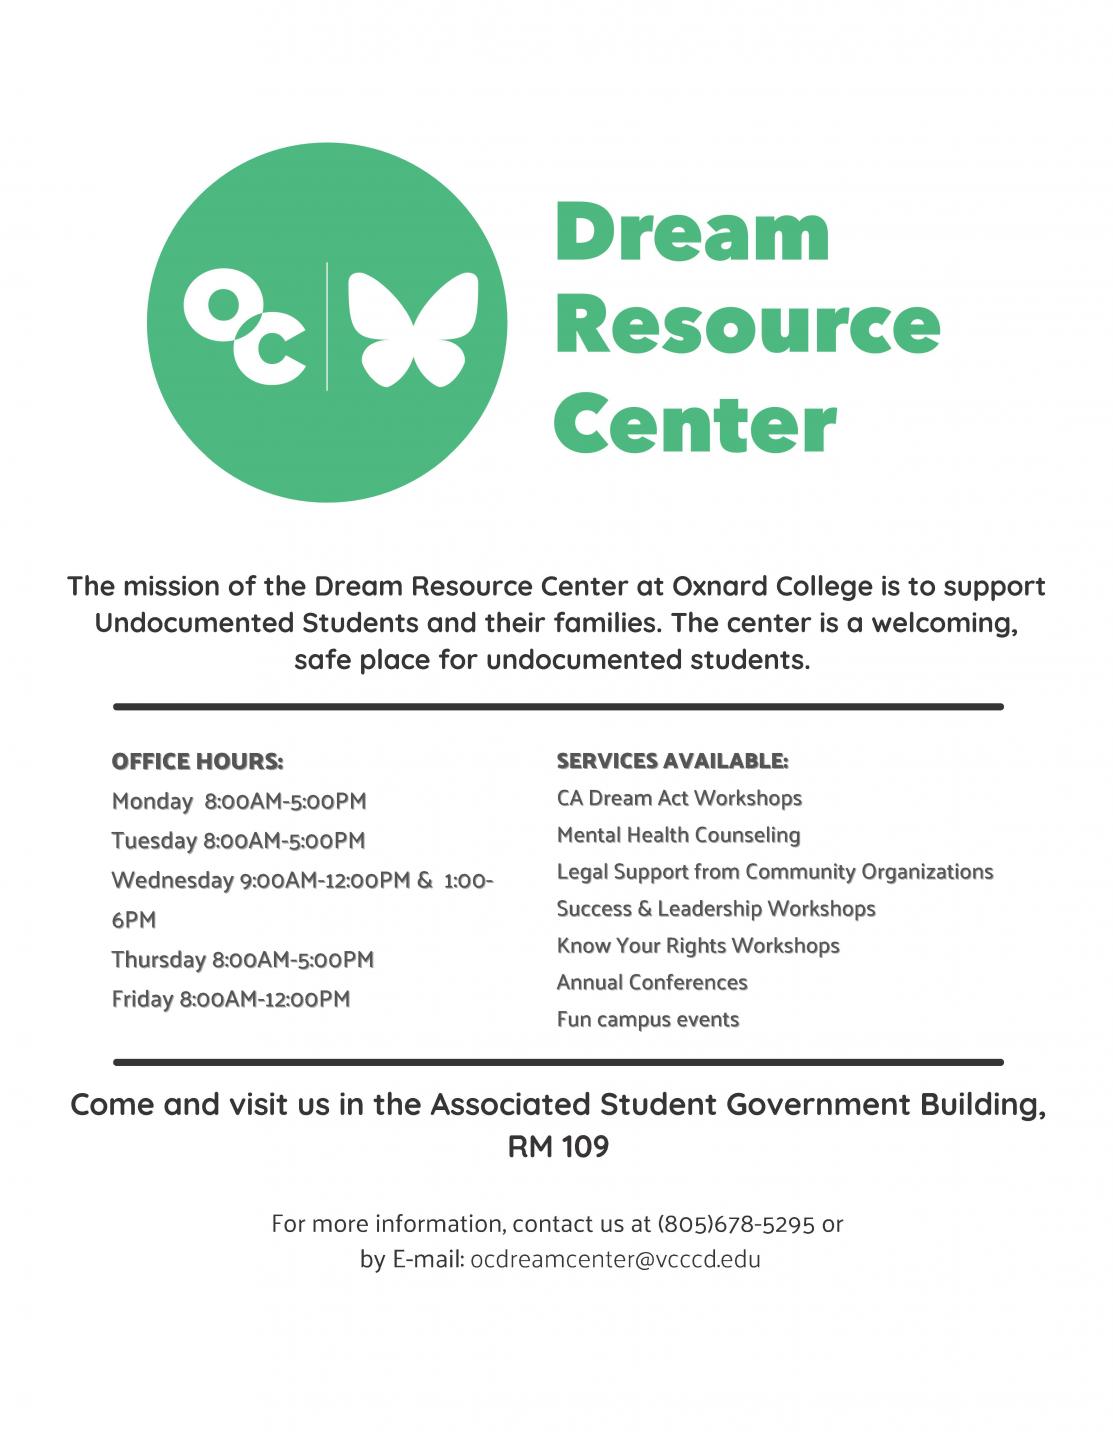 OC Dream Resource Center